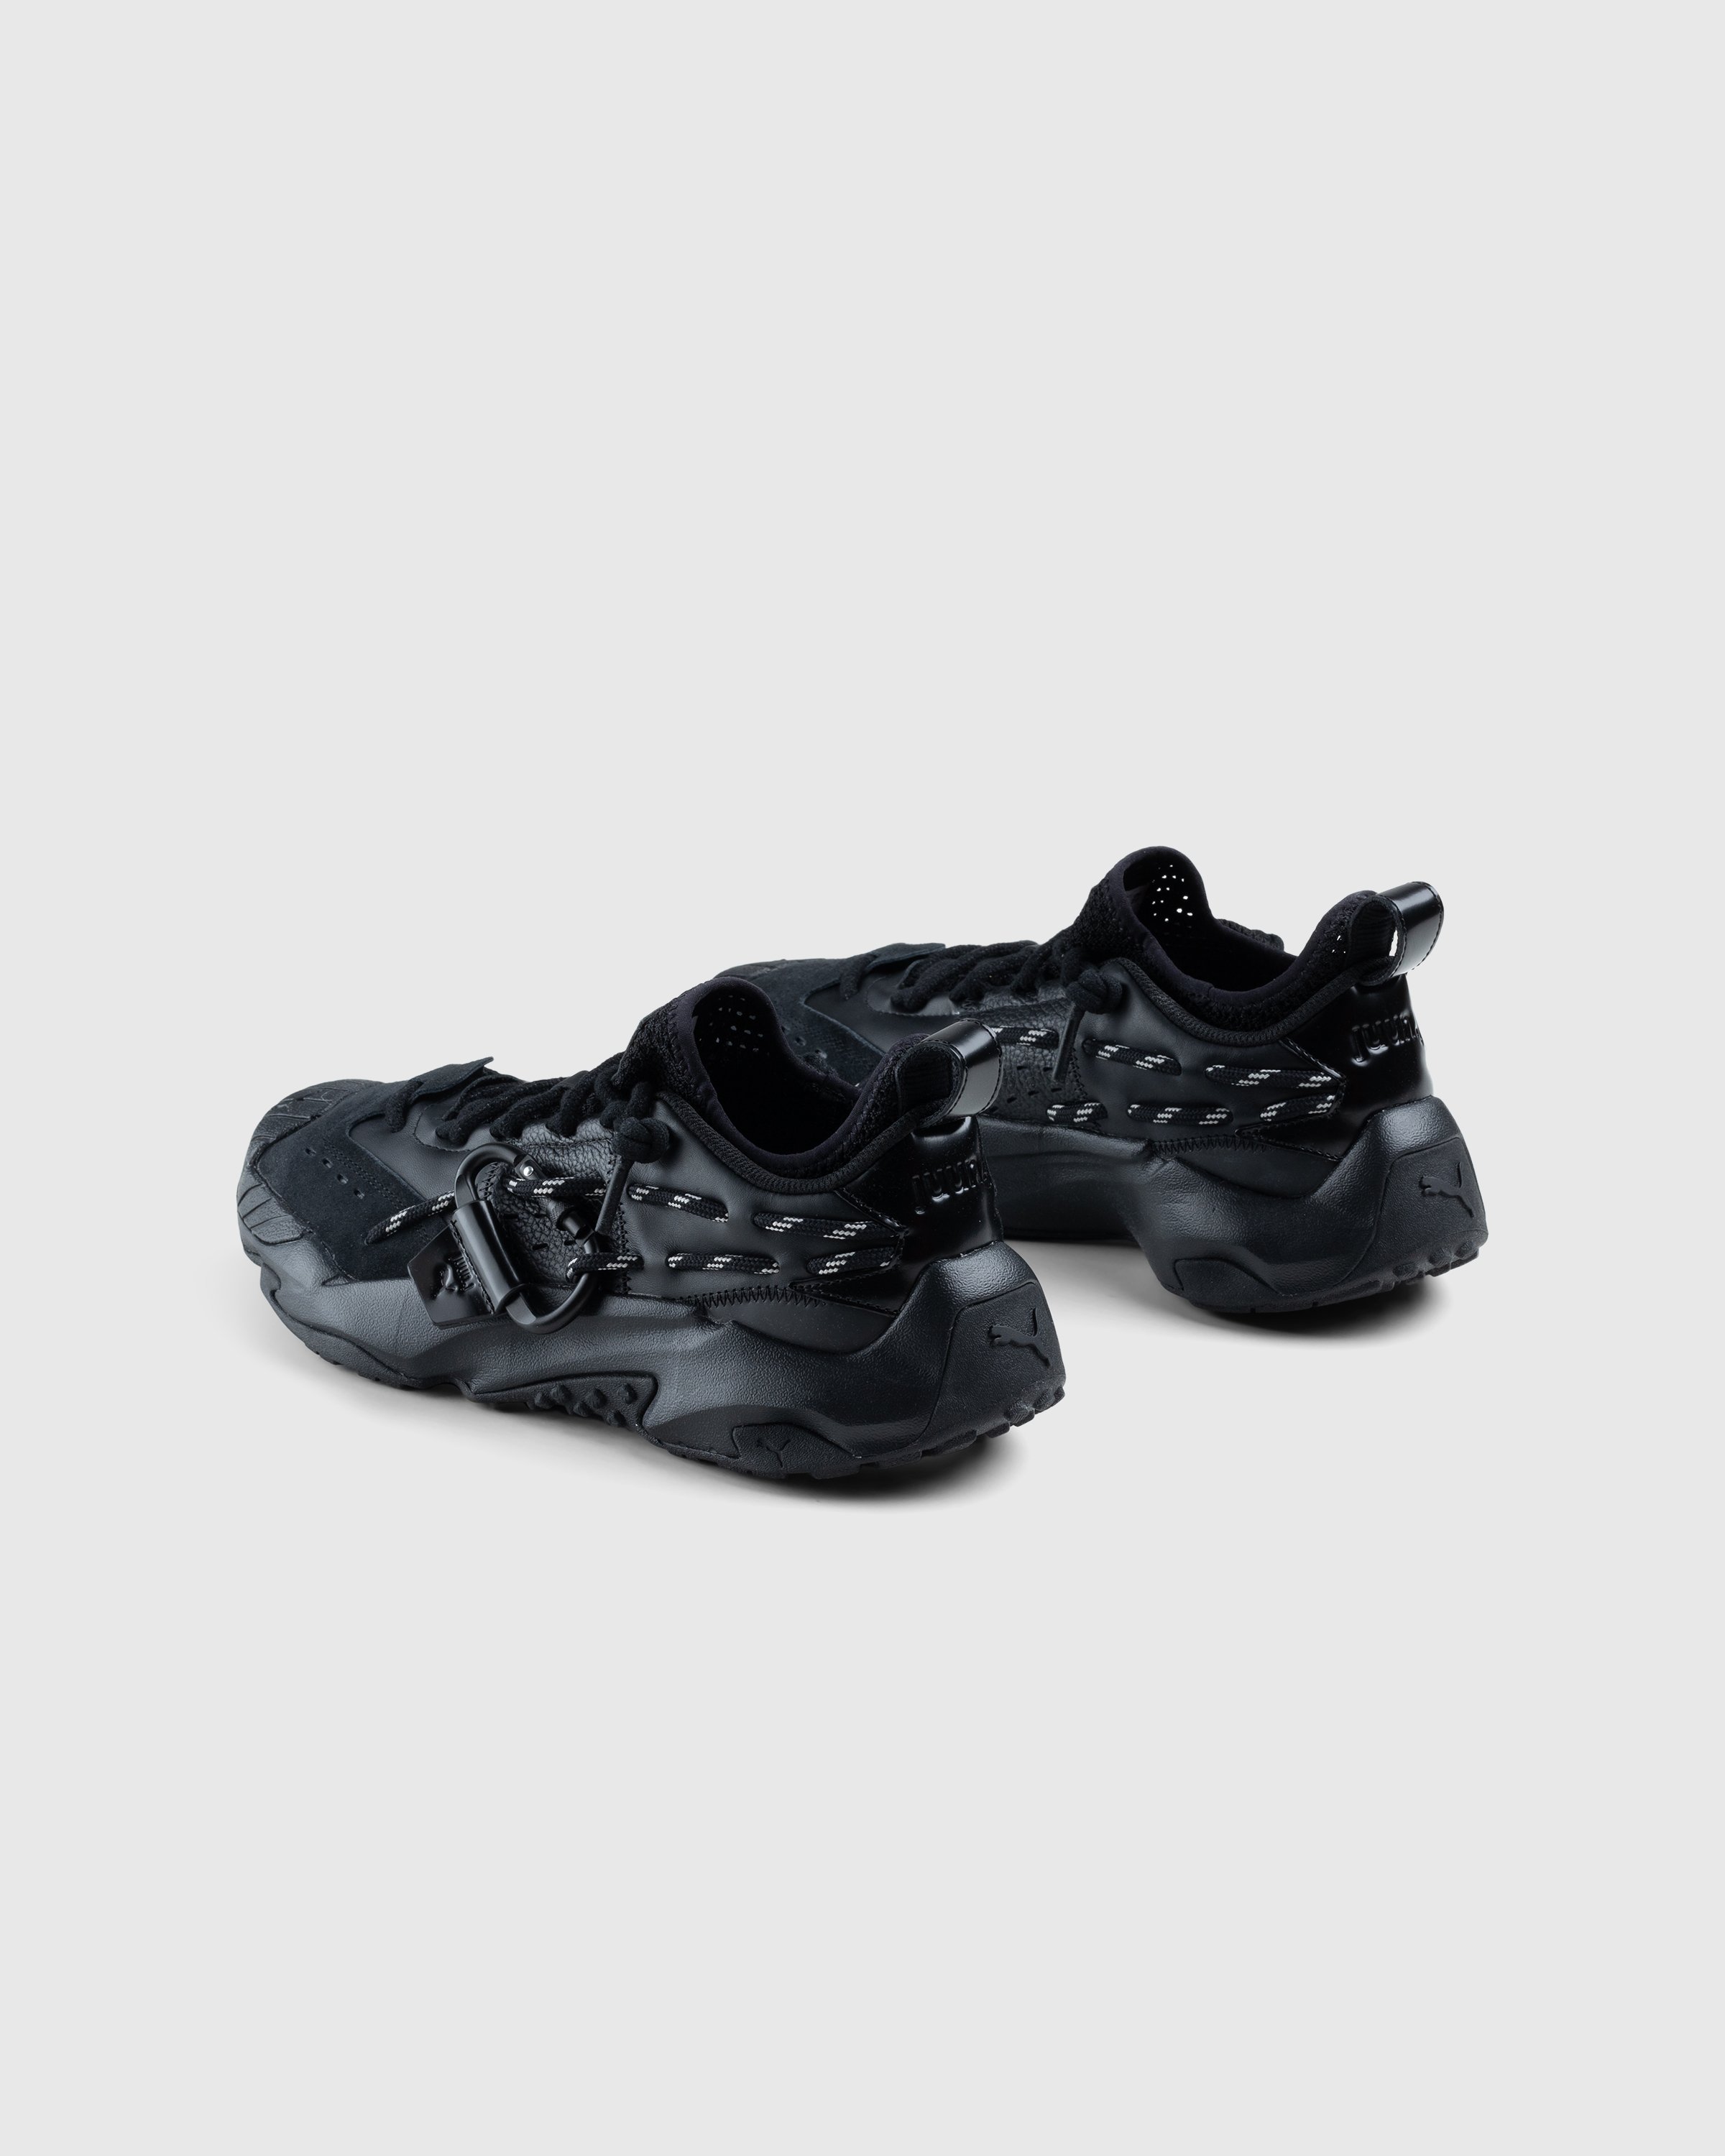 Puma - Plexus JUUN.J - Footwear - Black - Image 4